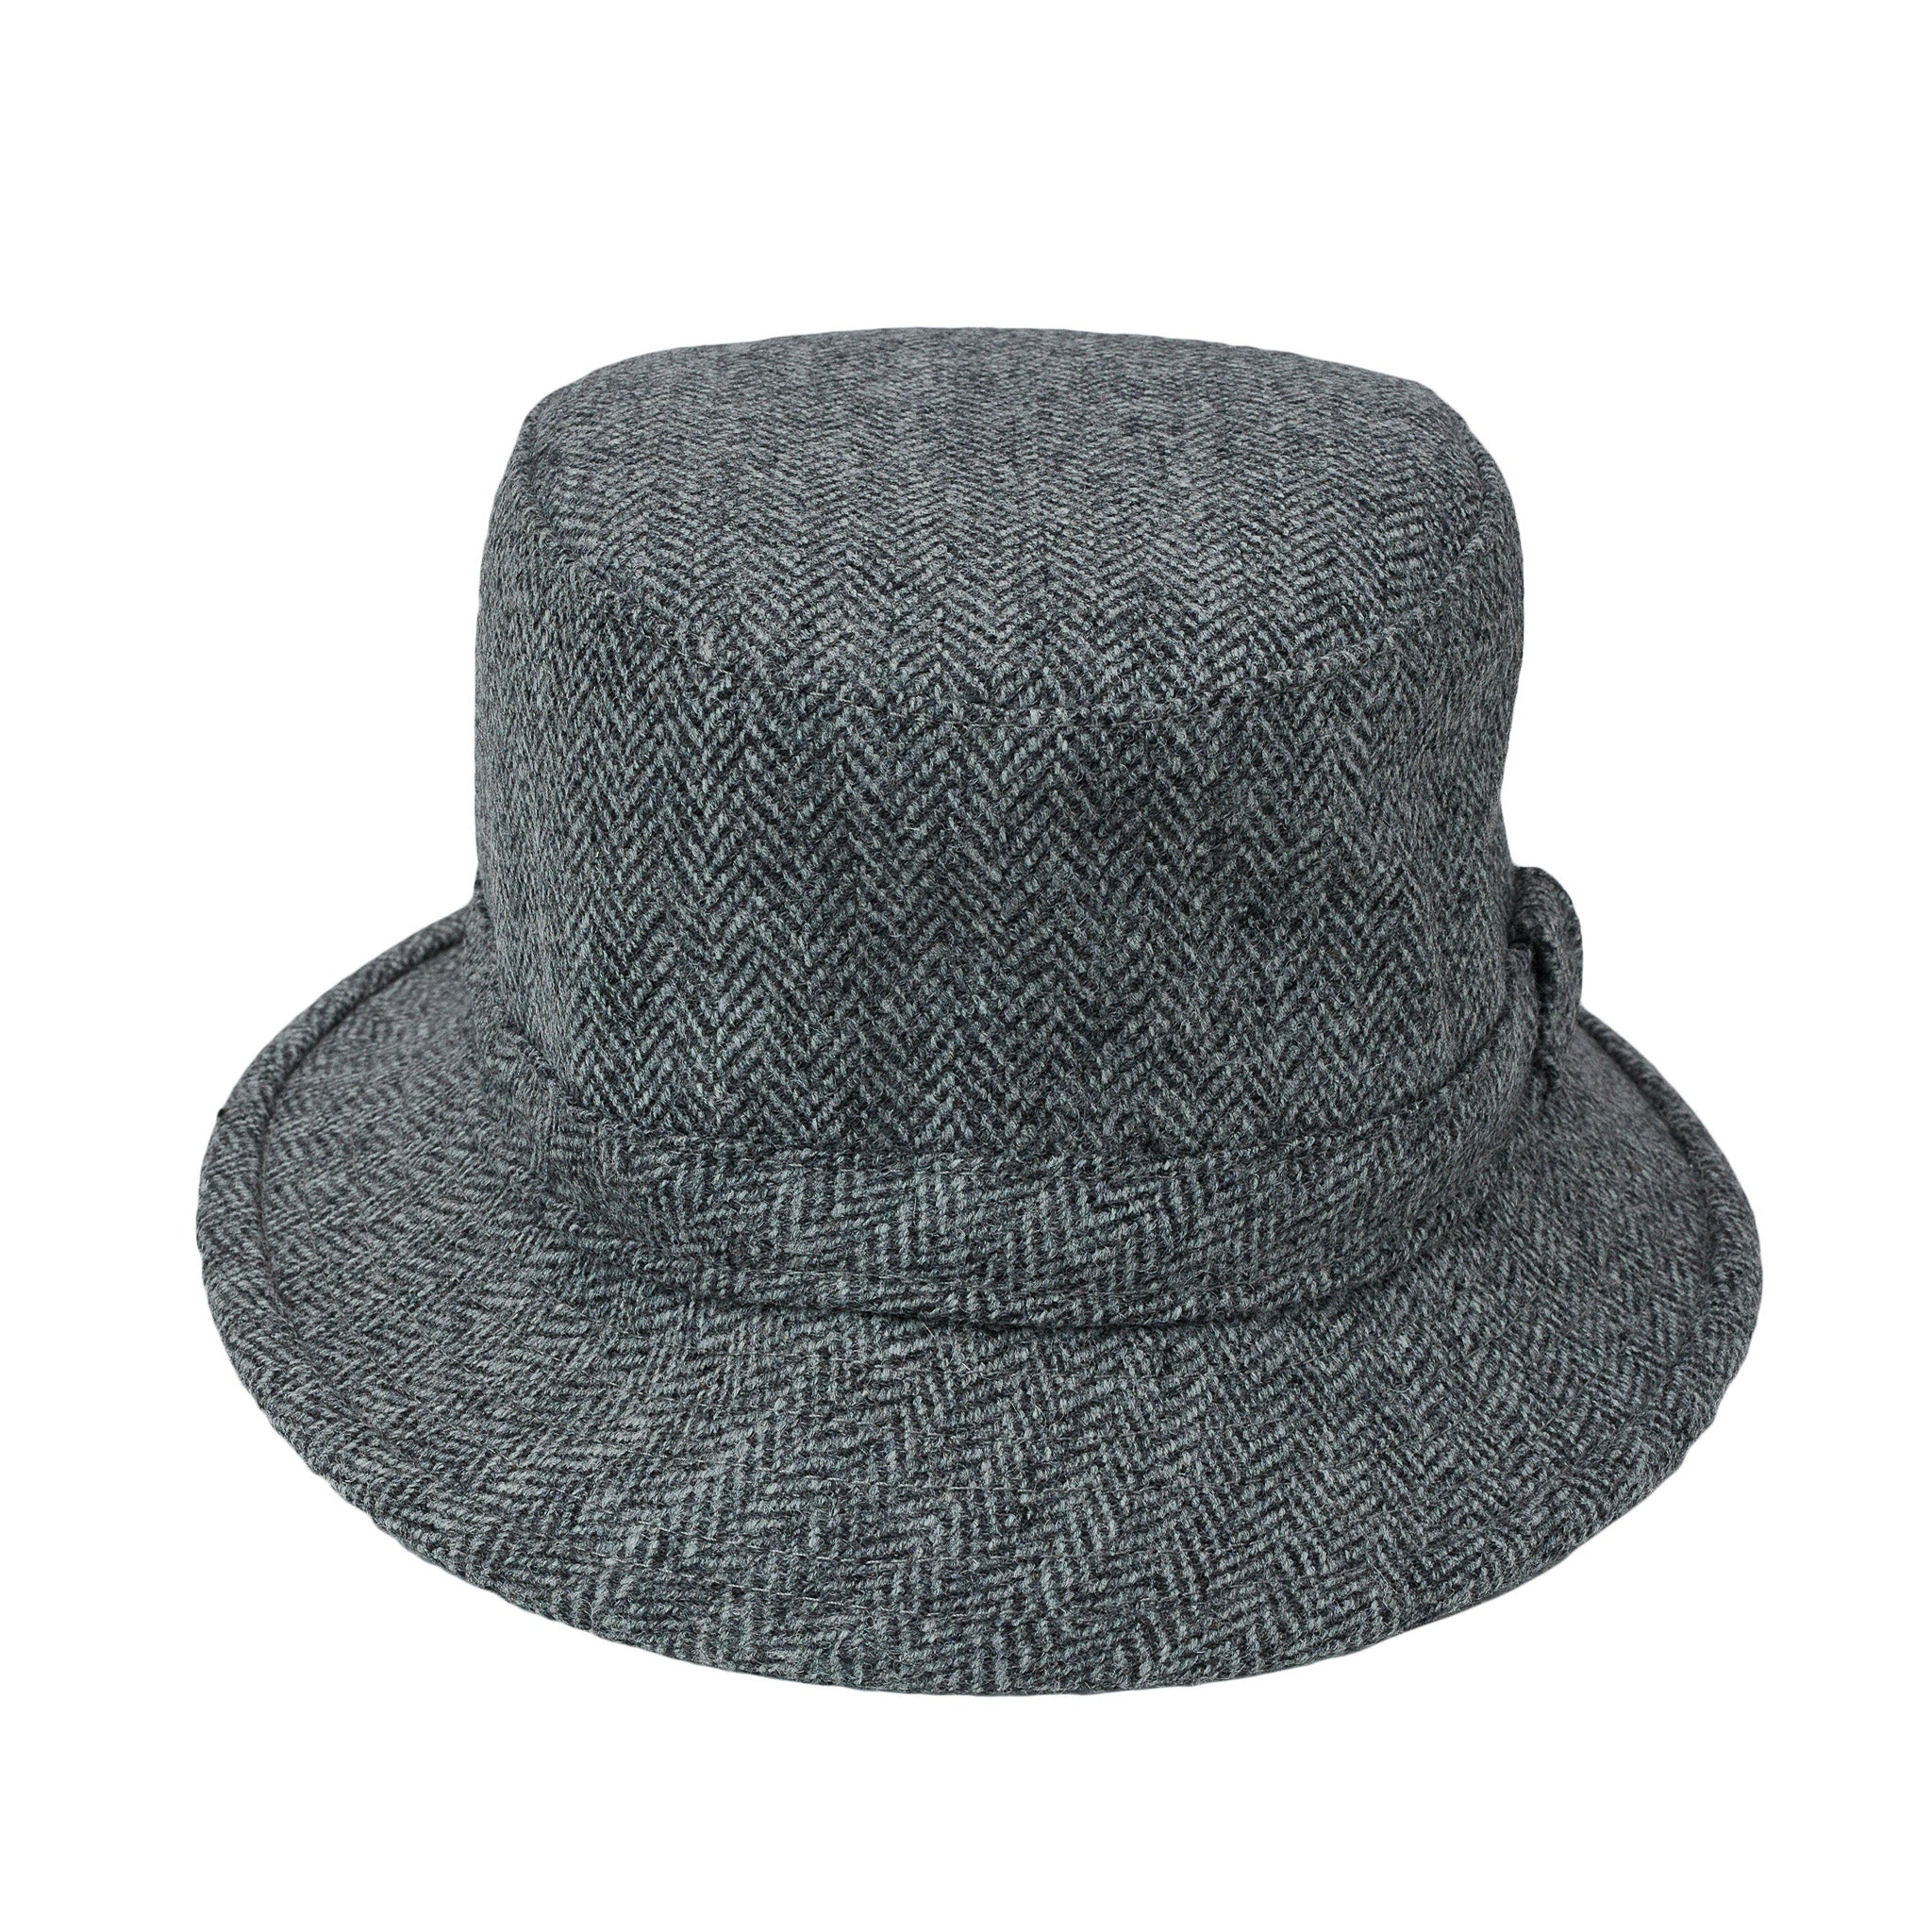 English Walking Hat in Gray Wool Tweed 6 Panel Short Brim Bucket